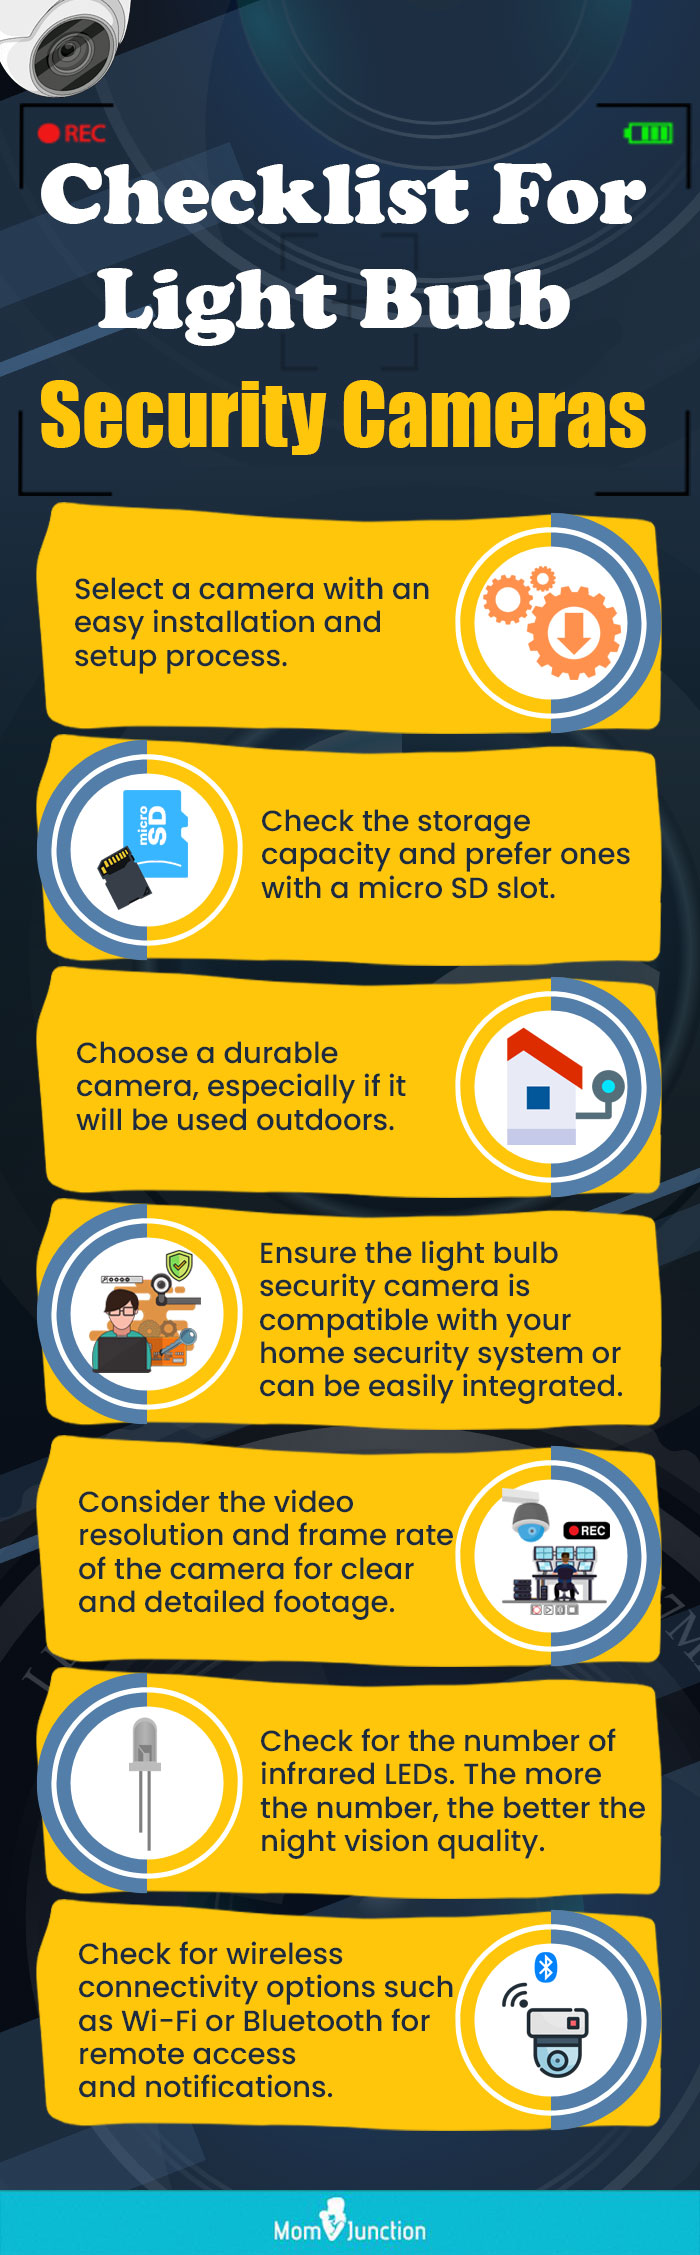 Checklist-For-Light-Bulb-Security-Cameras [infographic]